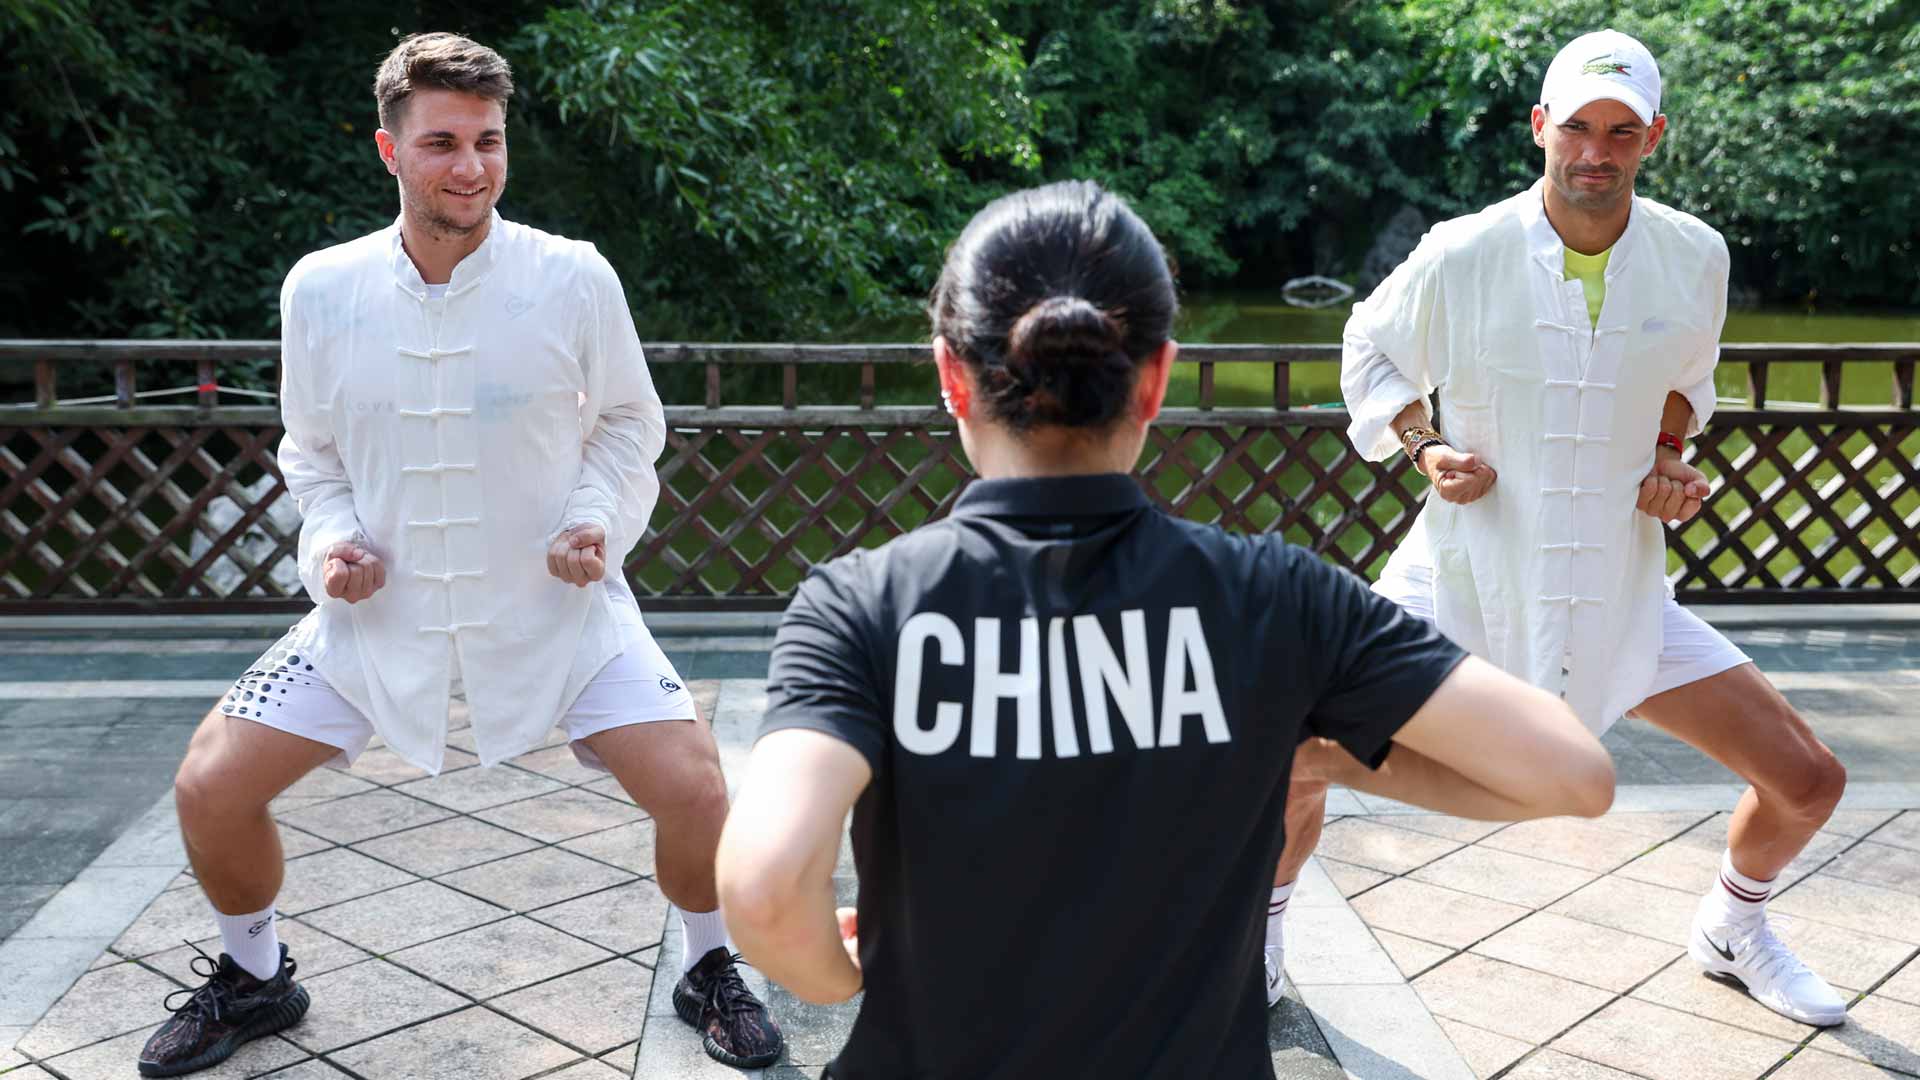 <a href='https://www.atptour.com/en/players/miomir-kecmanovic/ki95/overview'>Miomir Kecmanovic</a> (left) and <a href='https://www.atptour.com/en/players/grigor-dimitrov/d875/overview'>Grigor Dimitrov</a> learn kung fu in Chengdu.